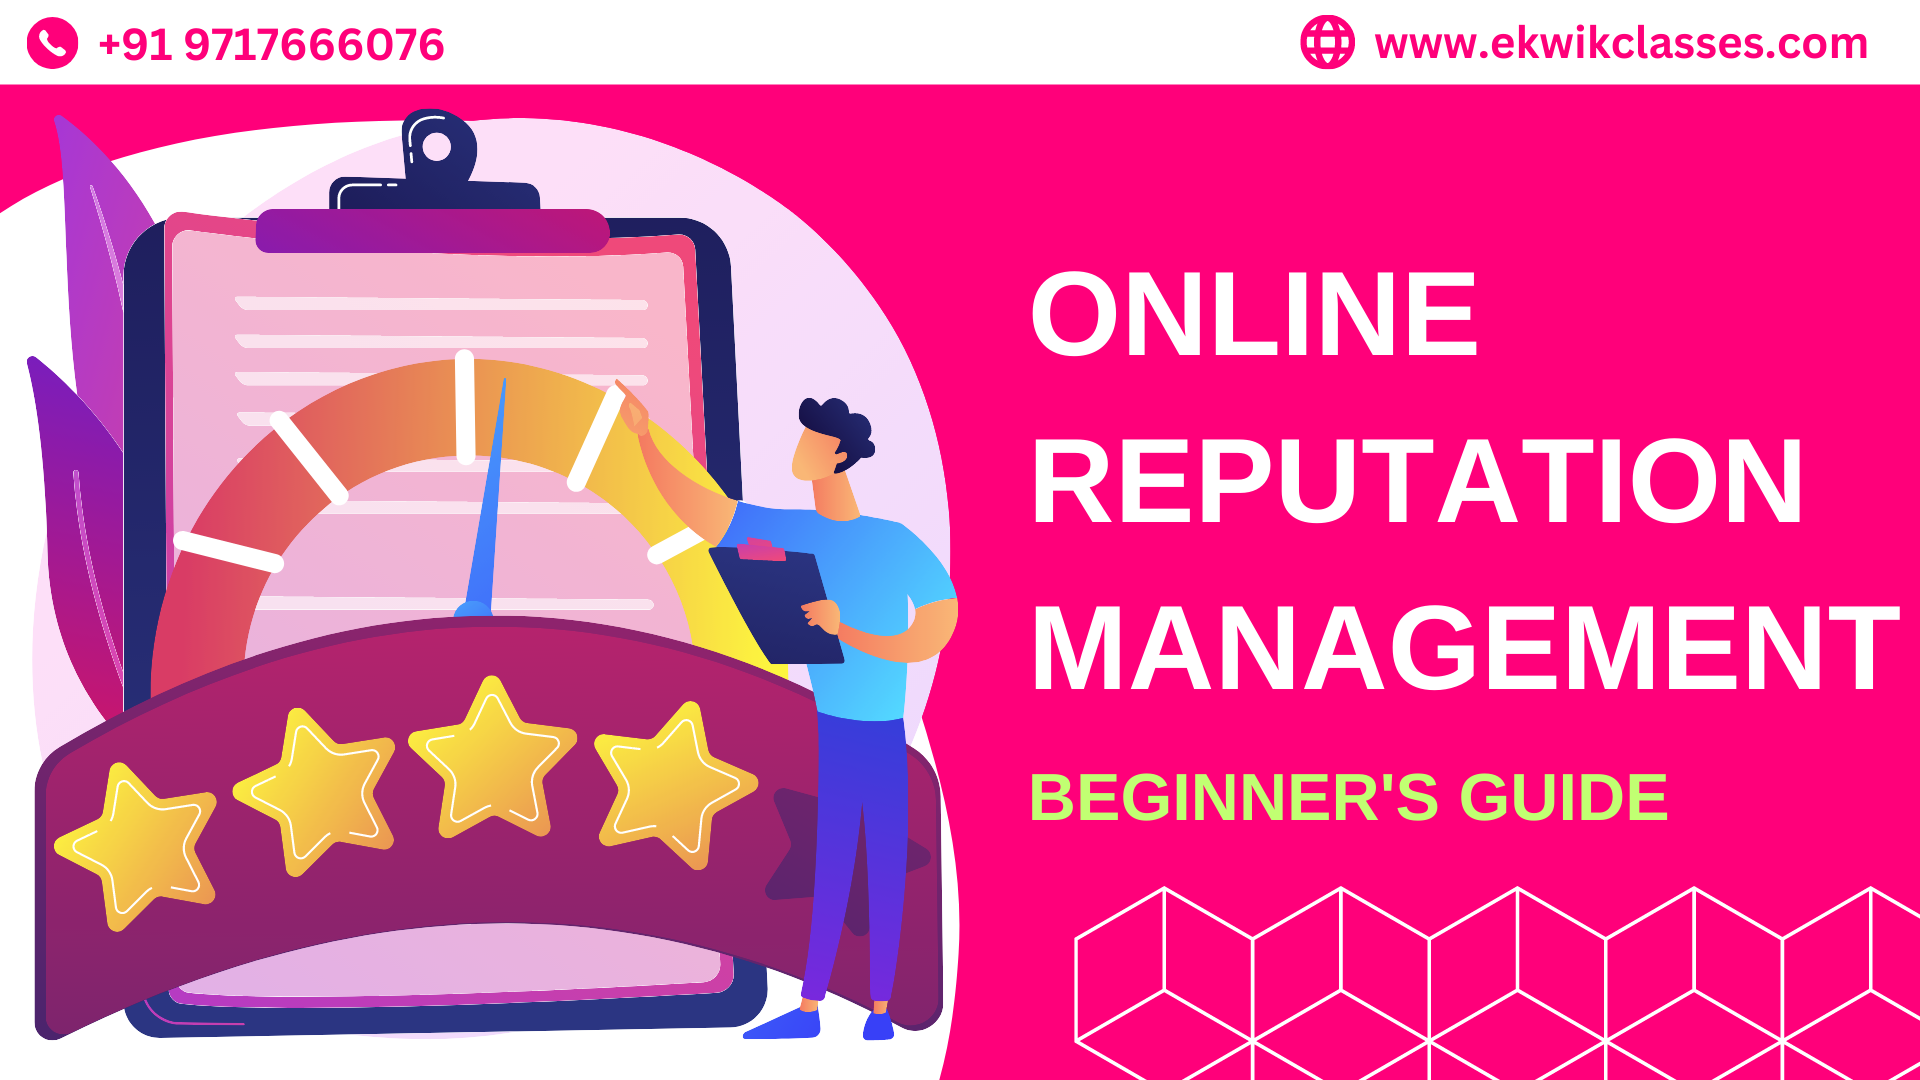 Online Reputation Management in Digital Marketing (Beginner's Guide)